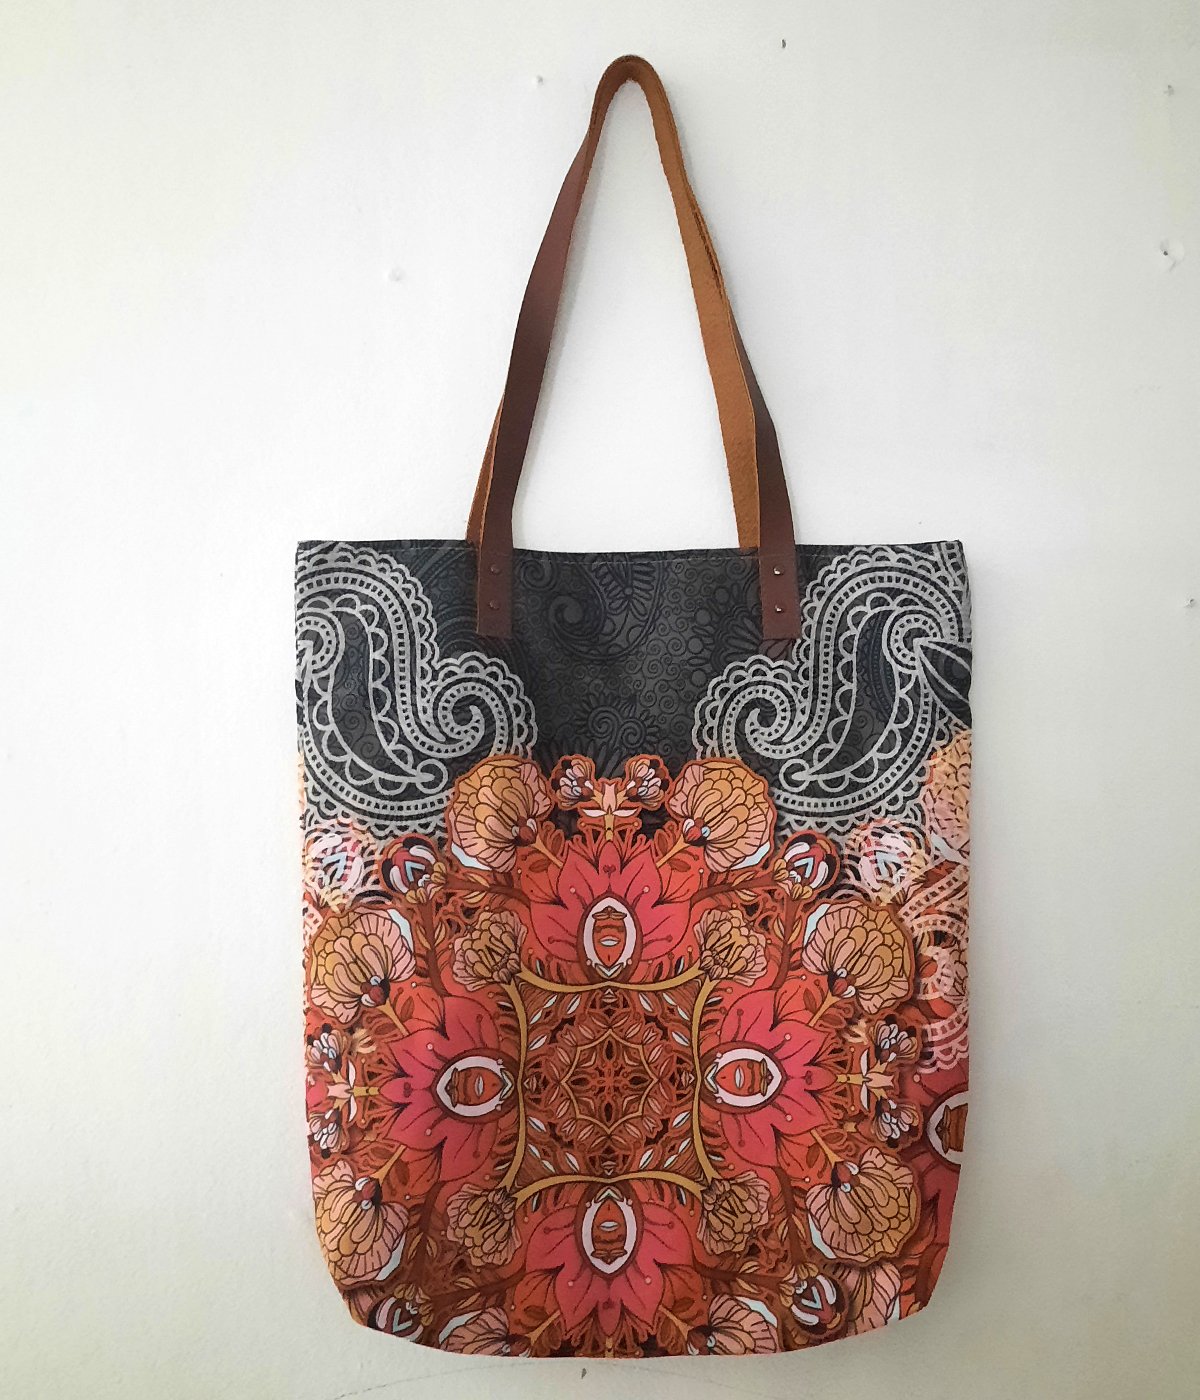 Mandala Printed Tote Bags / Canvas Bags / Tote Bags / Canvas Tote Bag / FREE SHIPPING